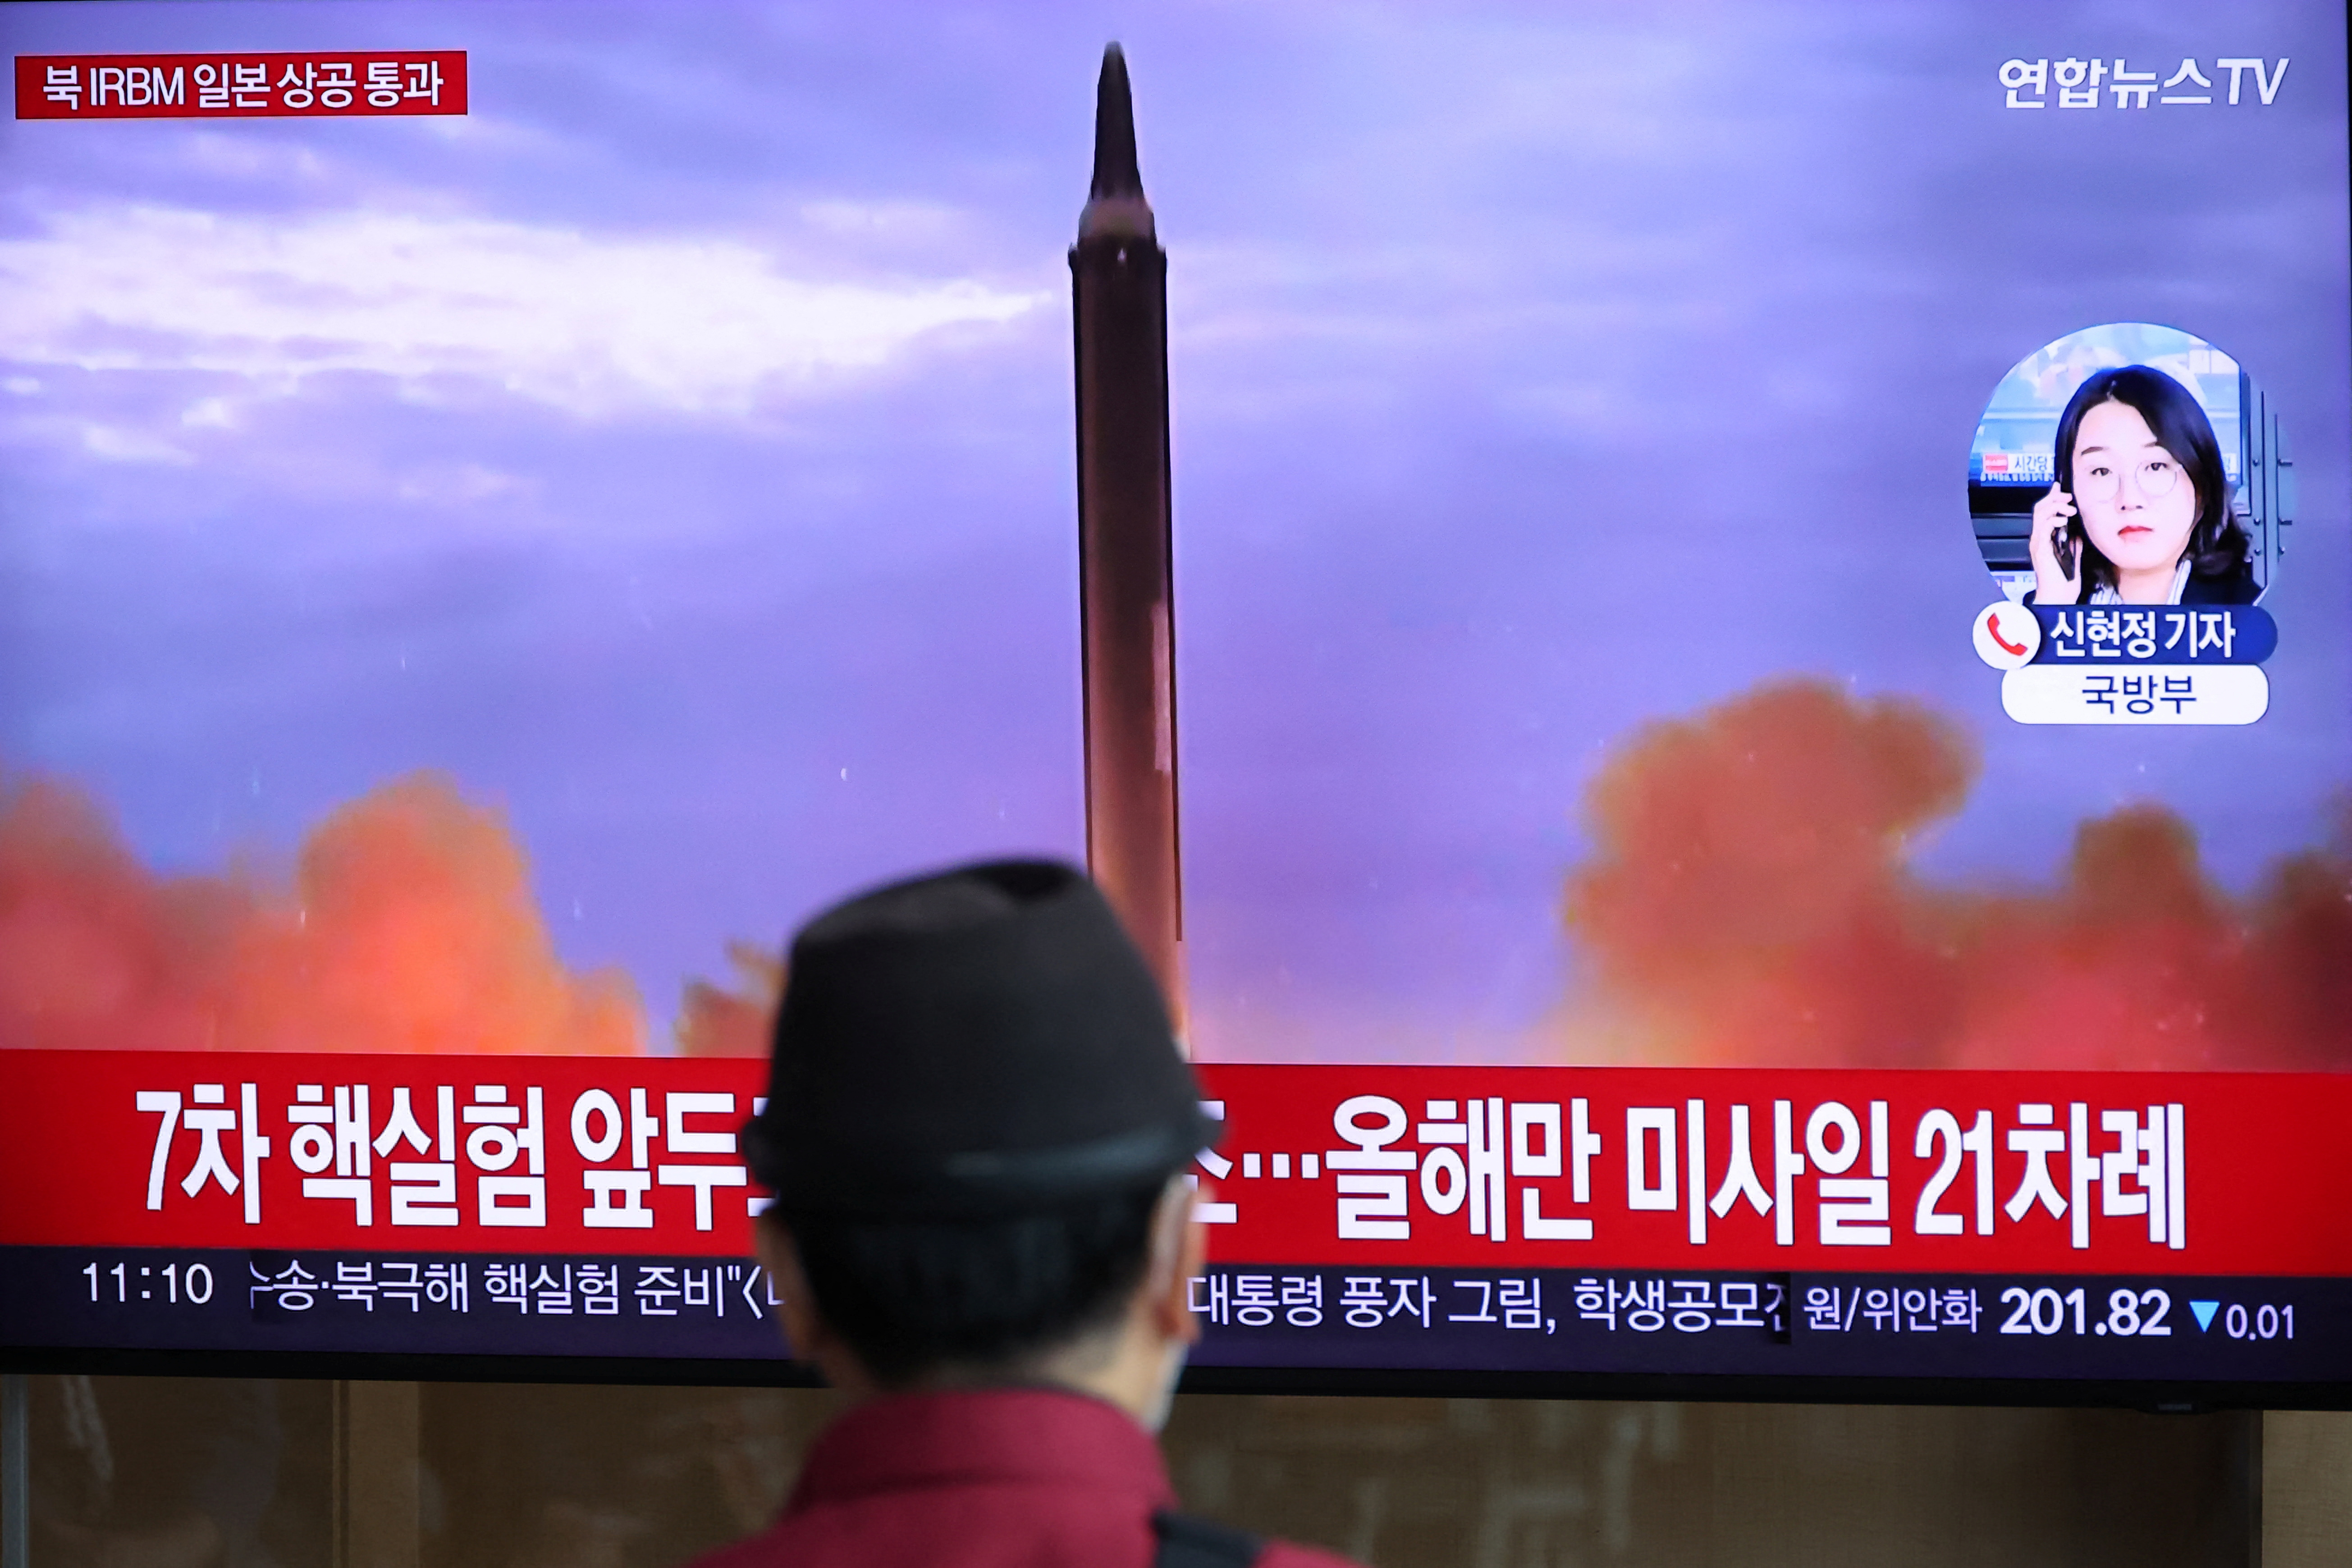 north korea nukes japan